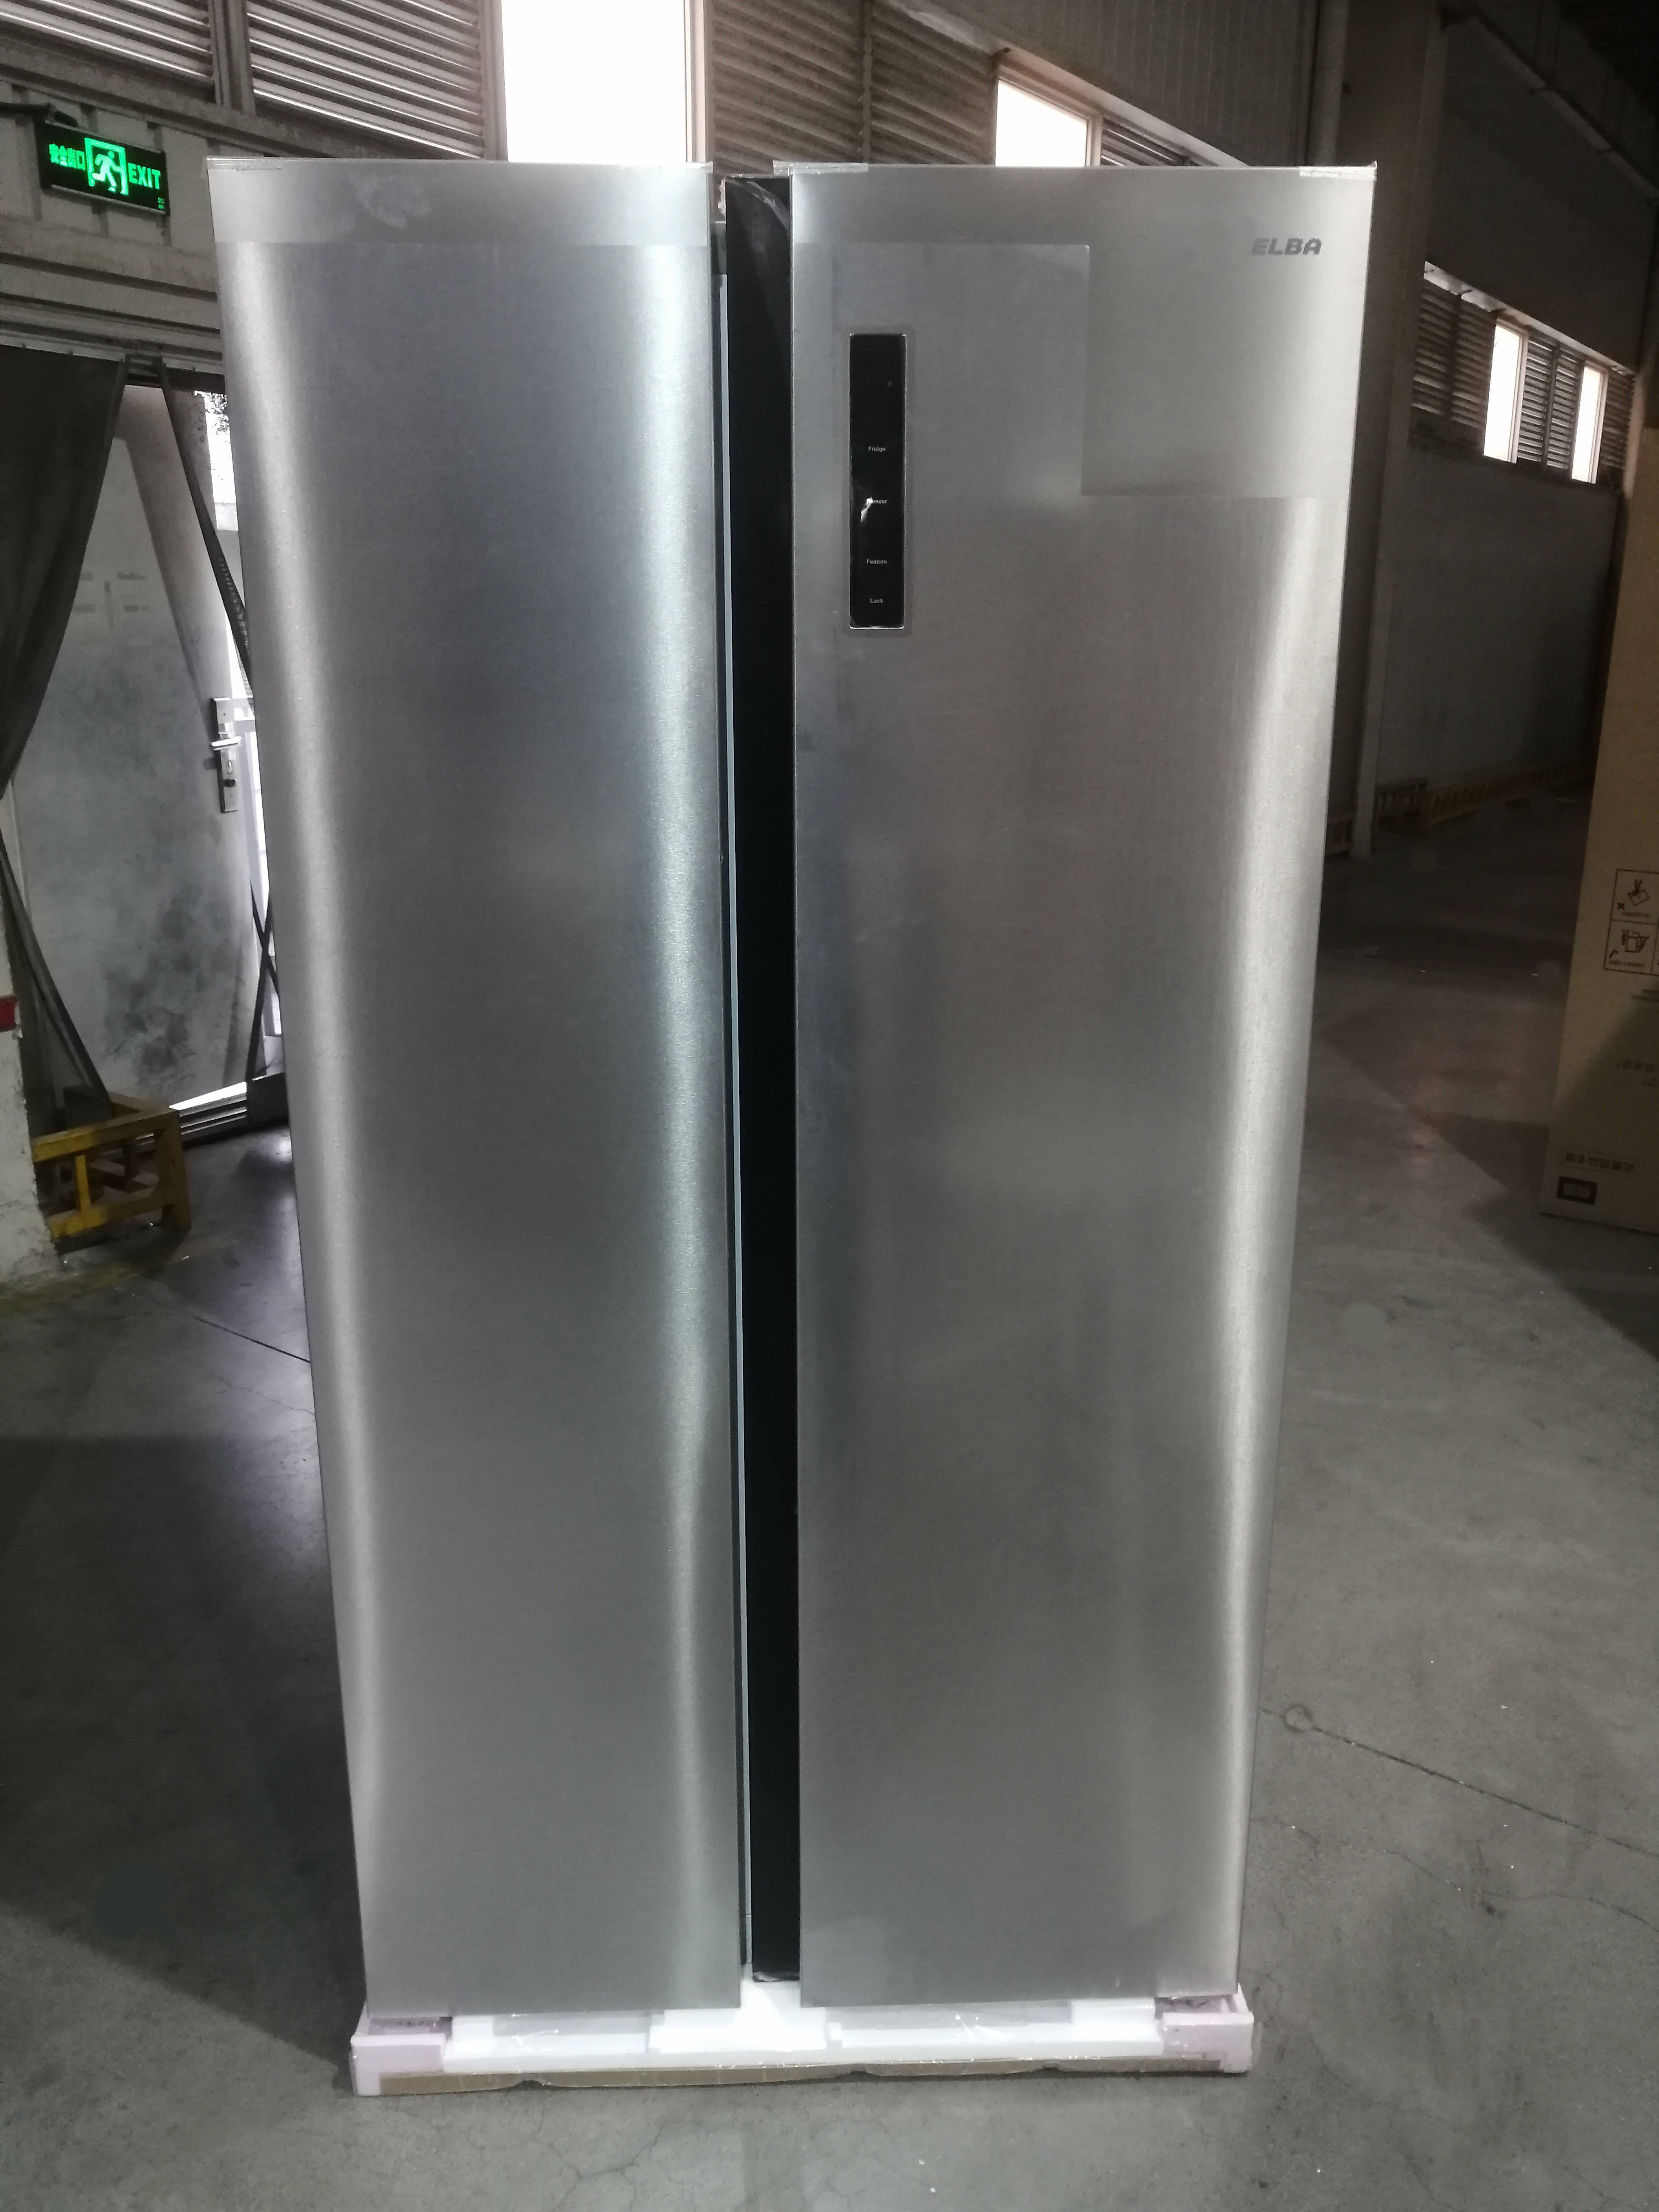 Side by Side refrigerator model number BCD-518W